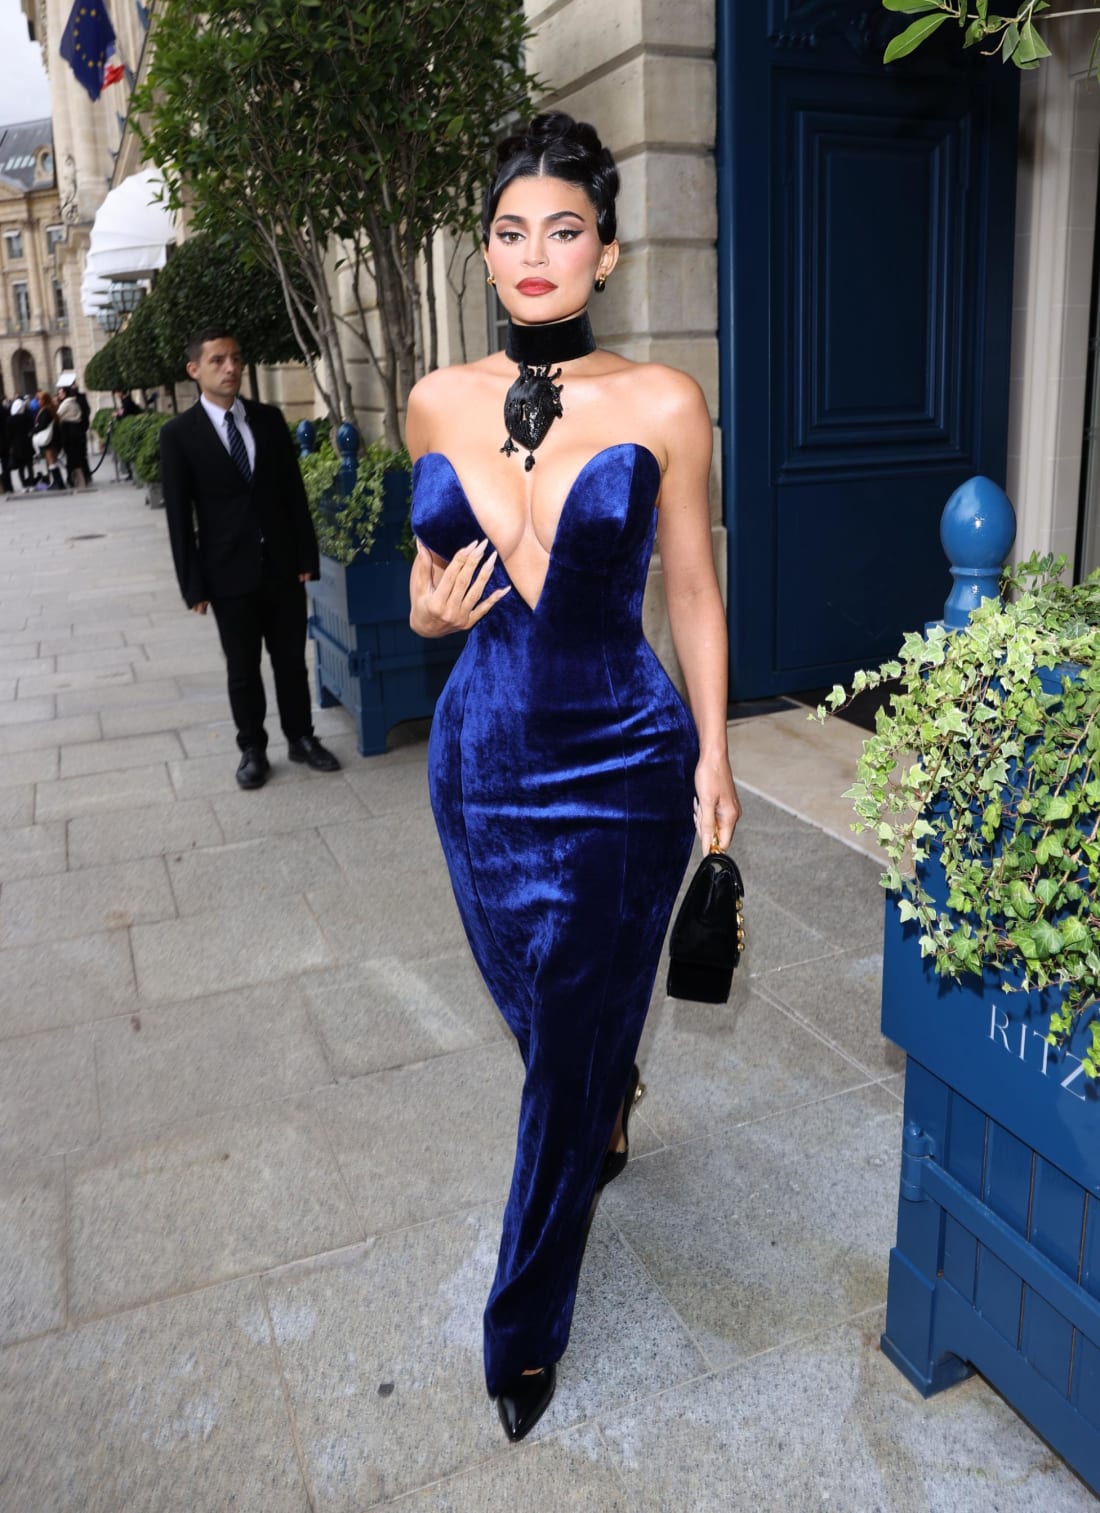 Kylie Jenner was spotted at the Schiaparelli presentation in a vampyric blue velvet dress.